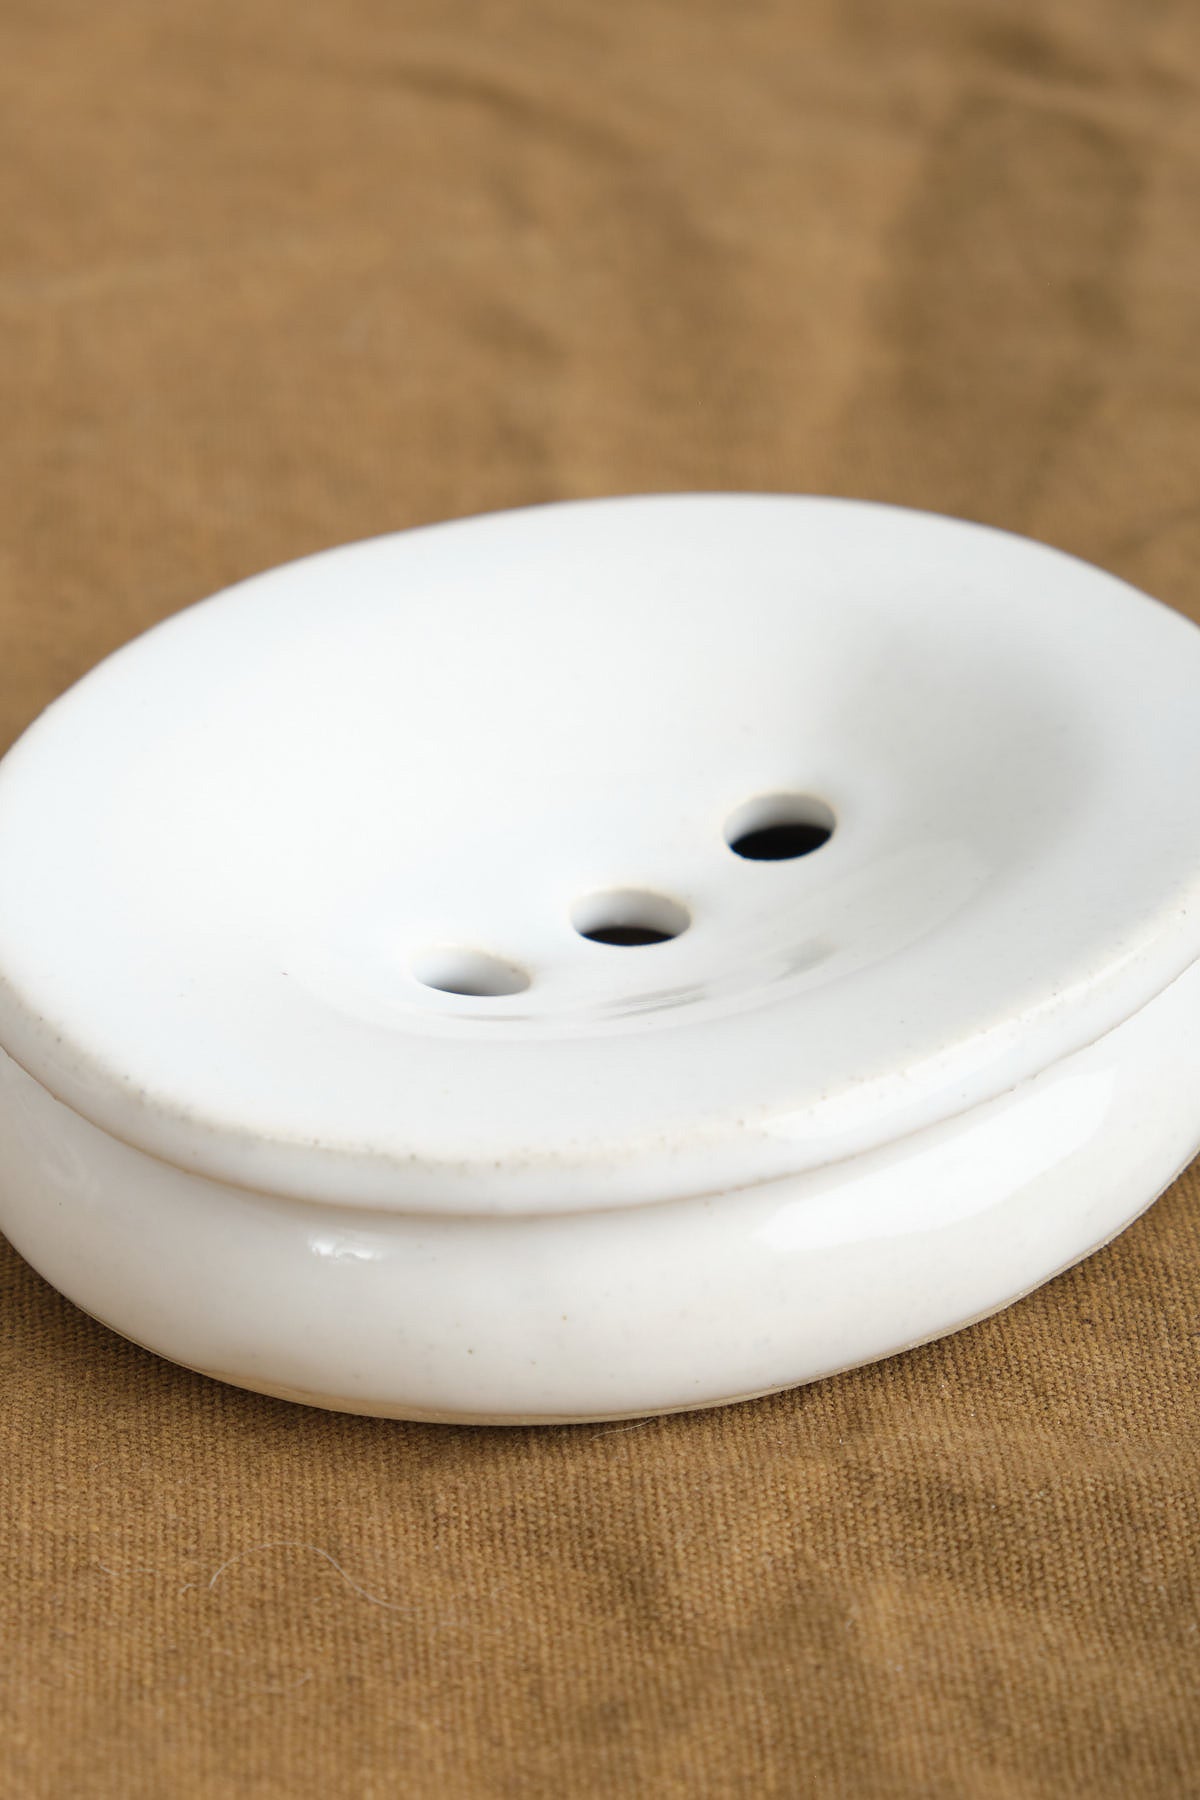 Glossy White Peb Soap Dish with Drainage holes